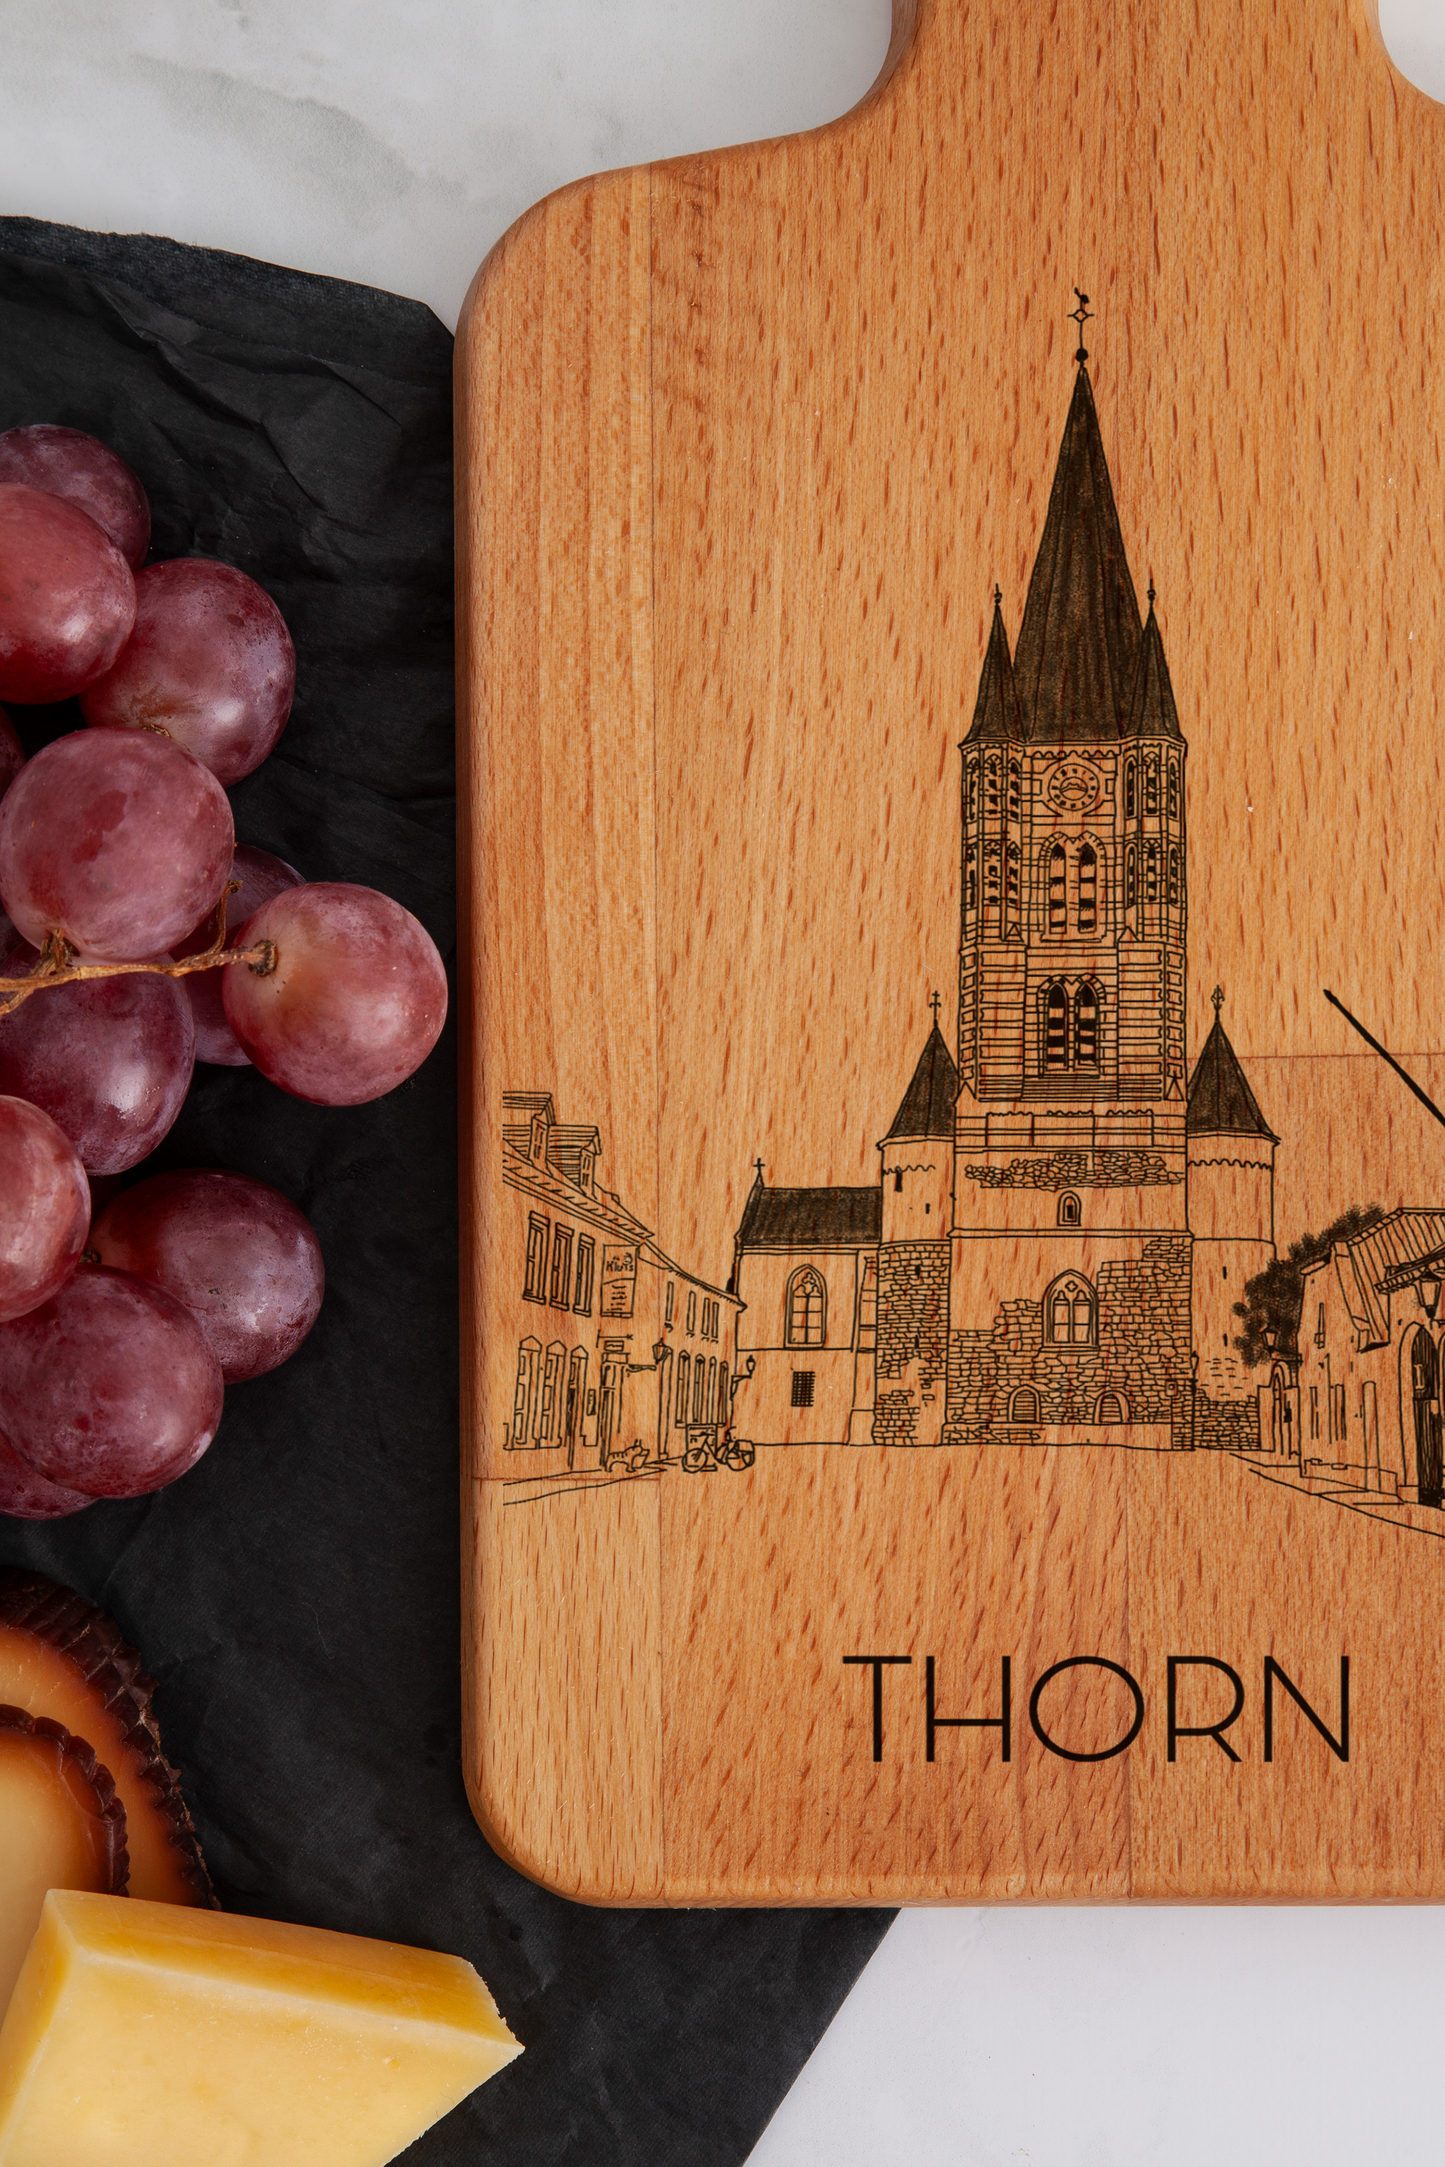 Thorn, Abdij Kerk, cheese board, close-up